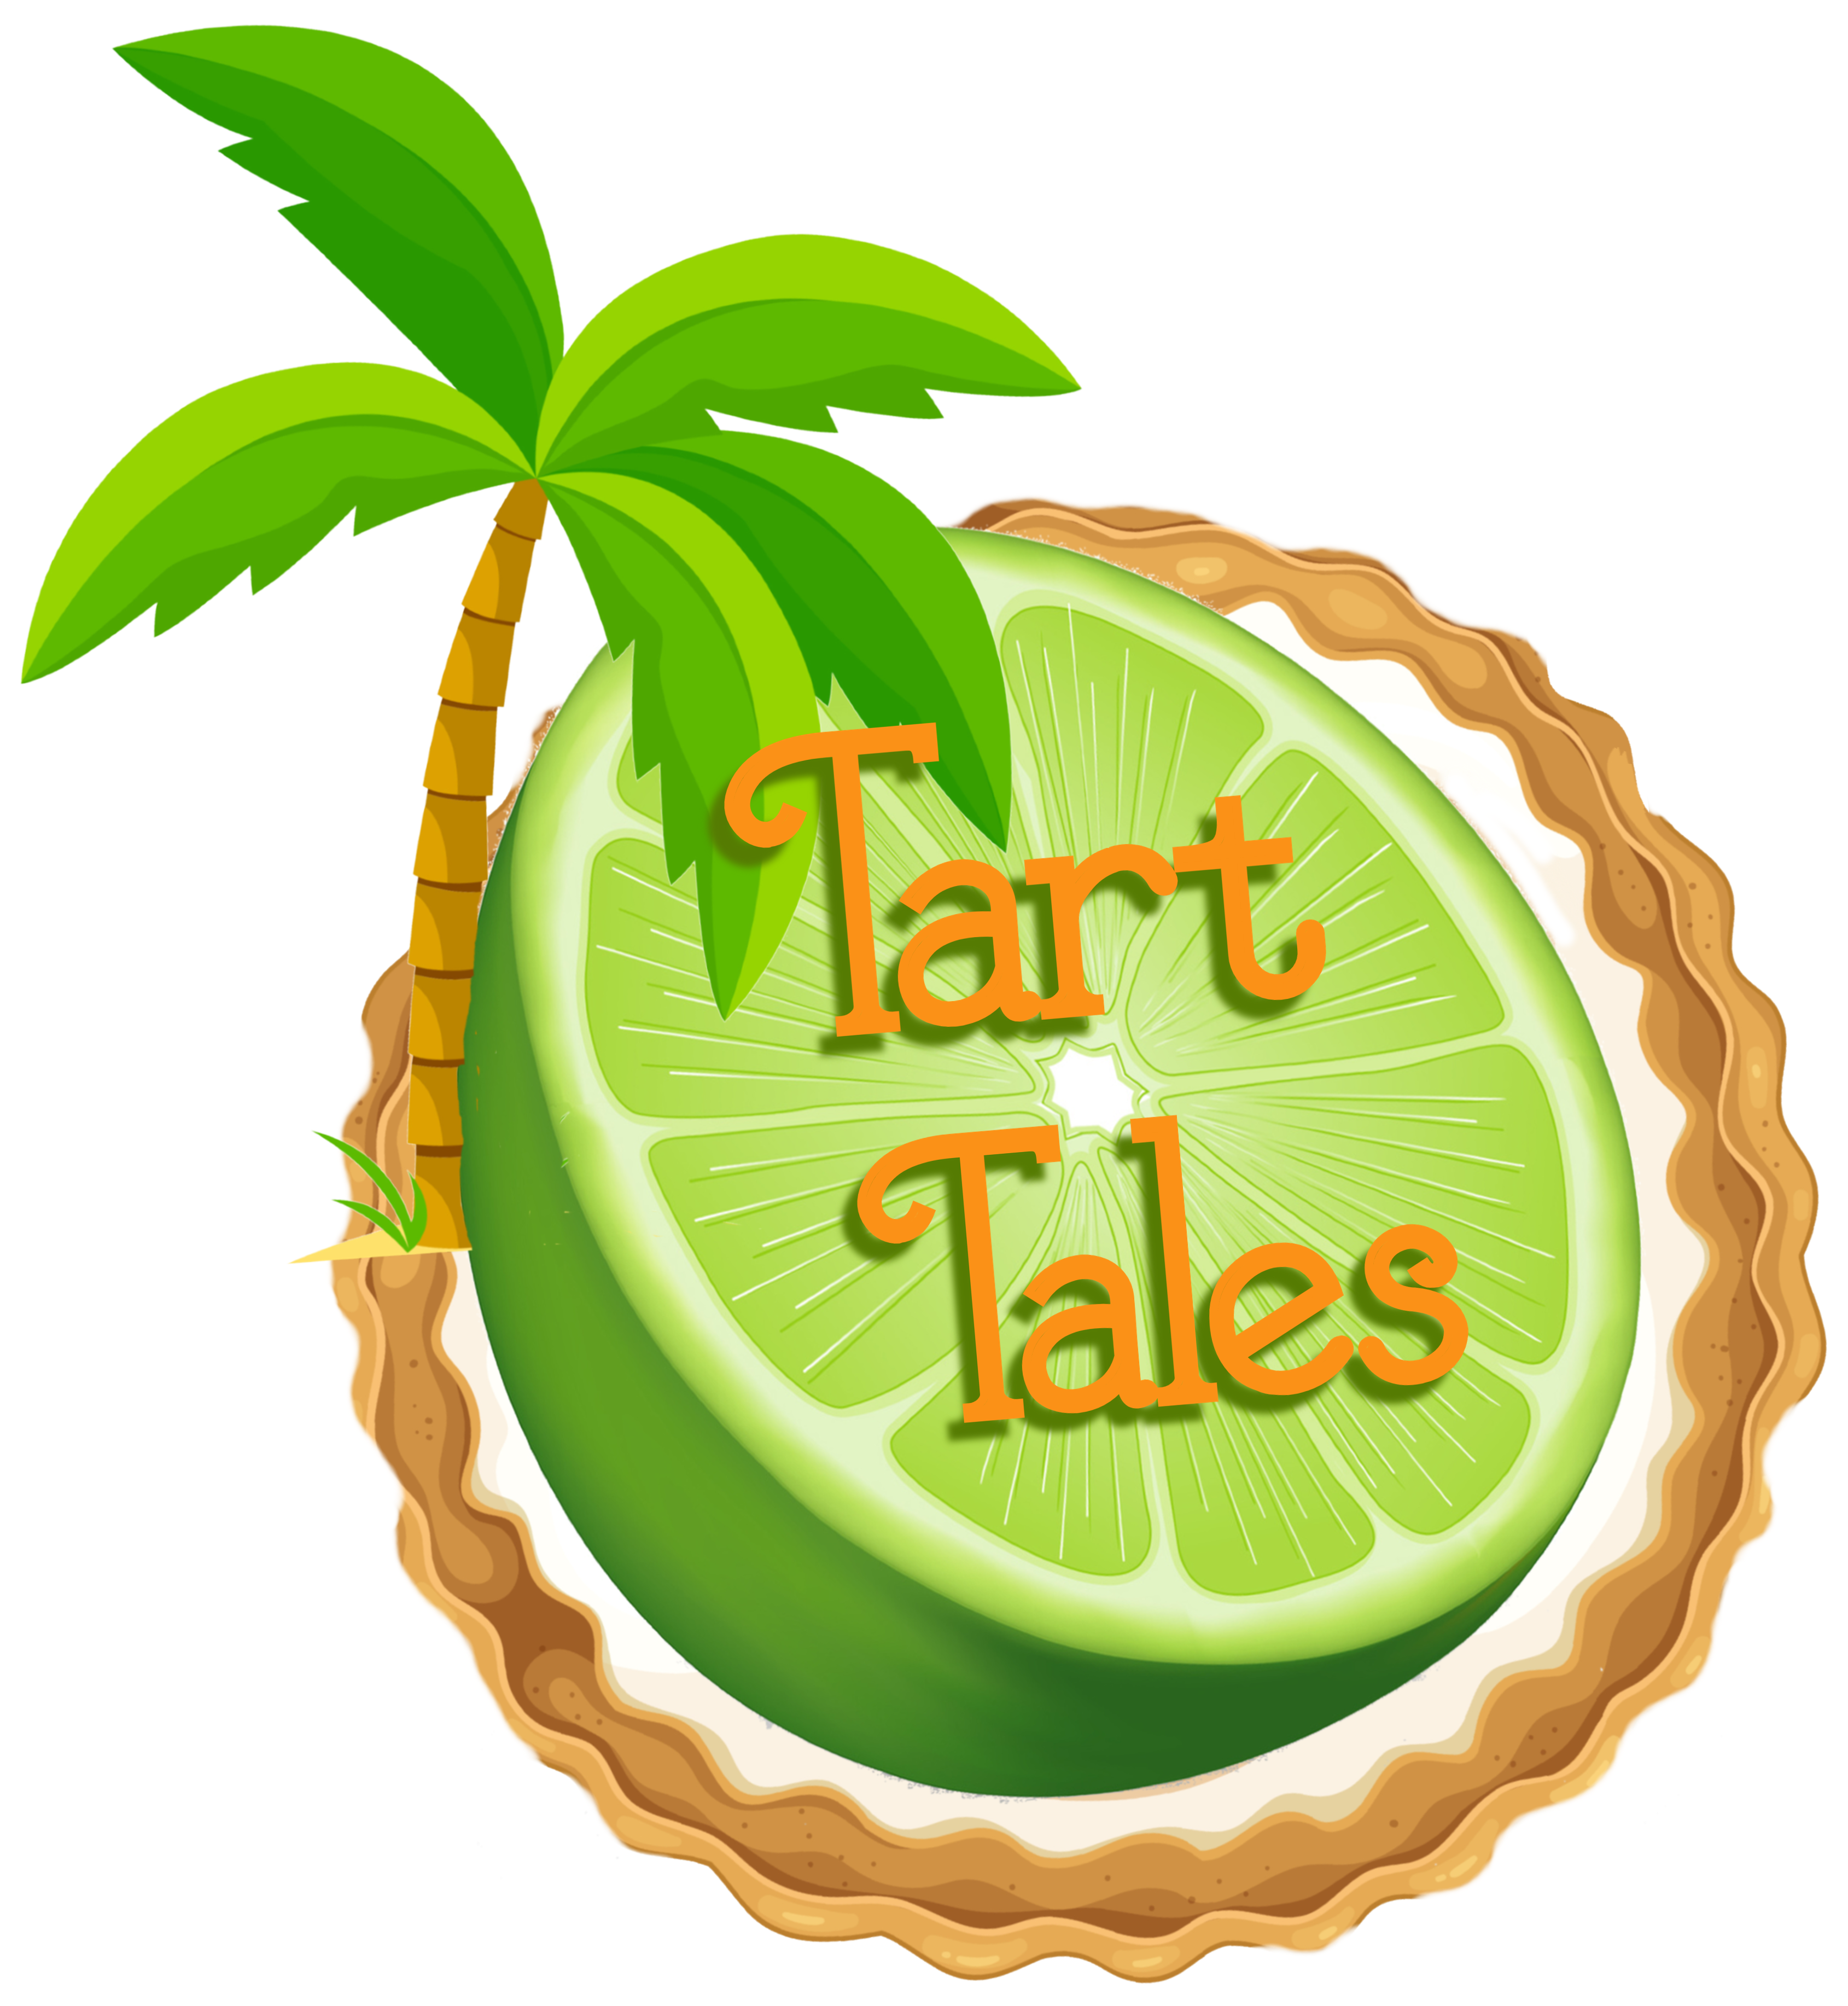 Tart Tales Key West Key Lime Pie Walking Tours Logo